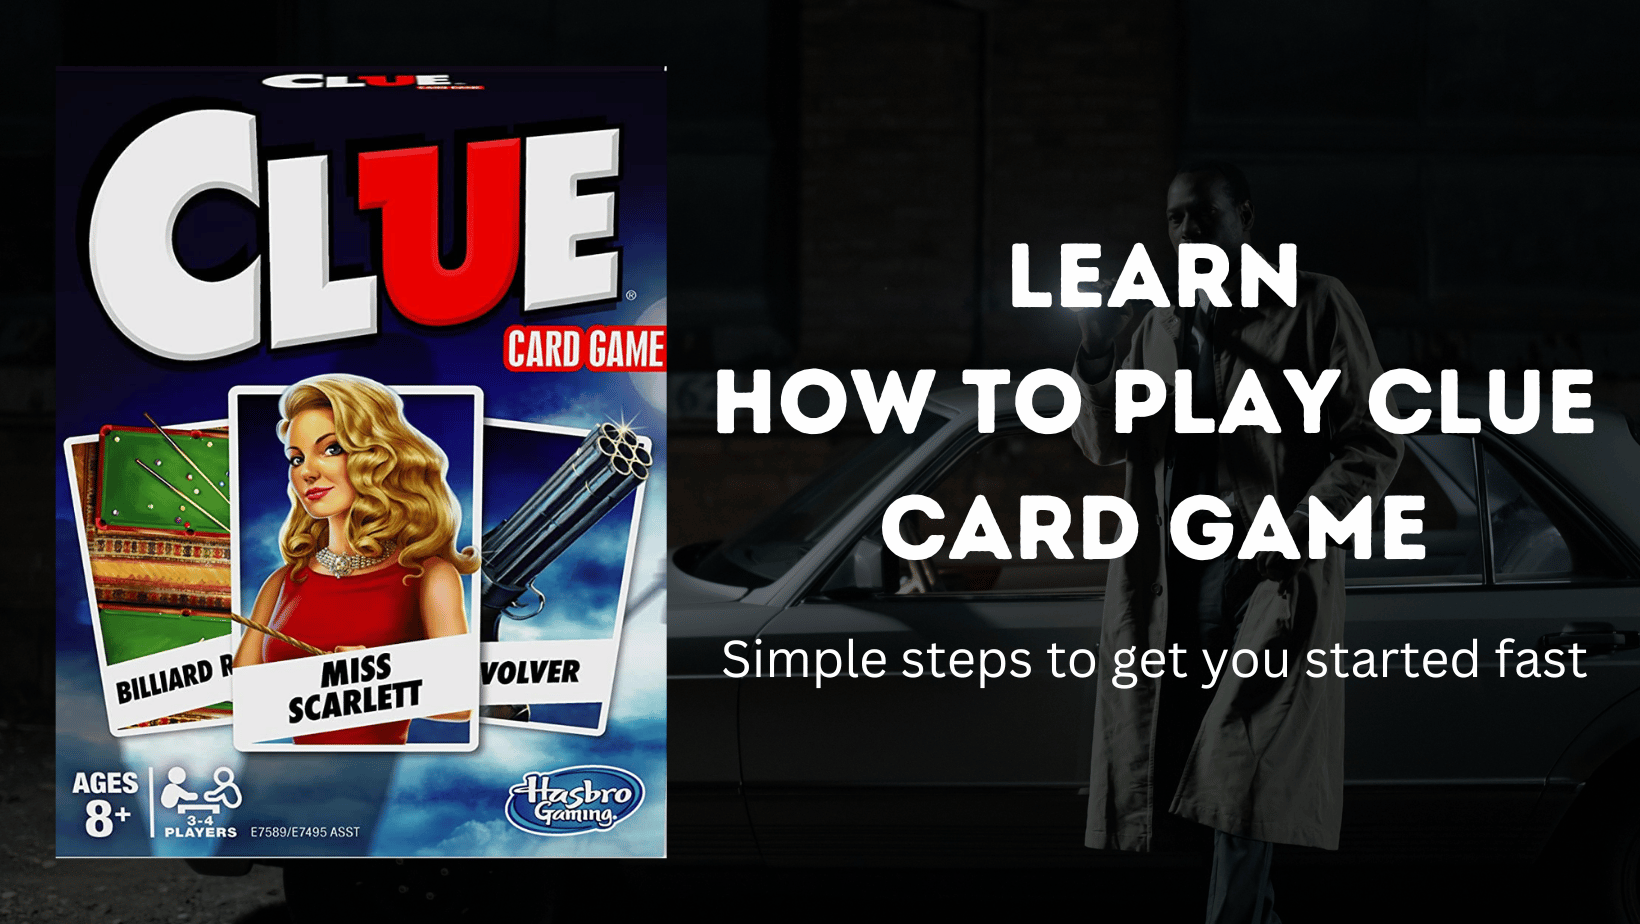 Clue Card Game Rules